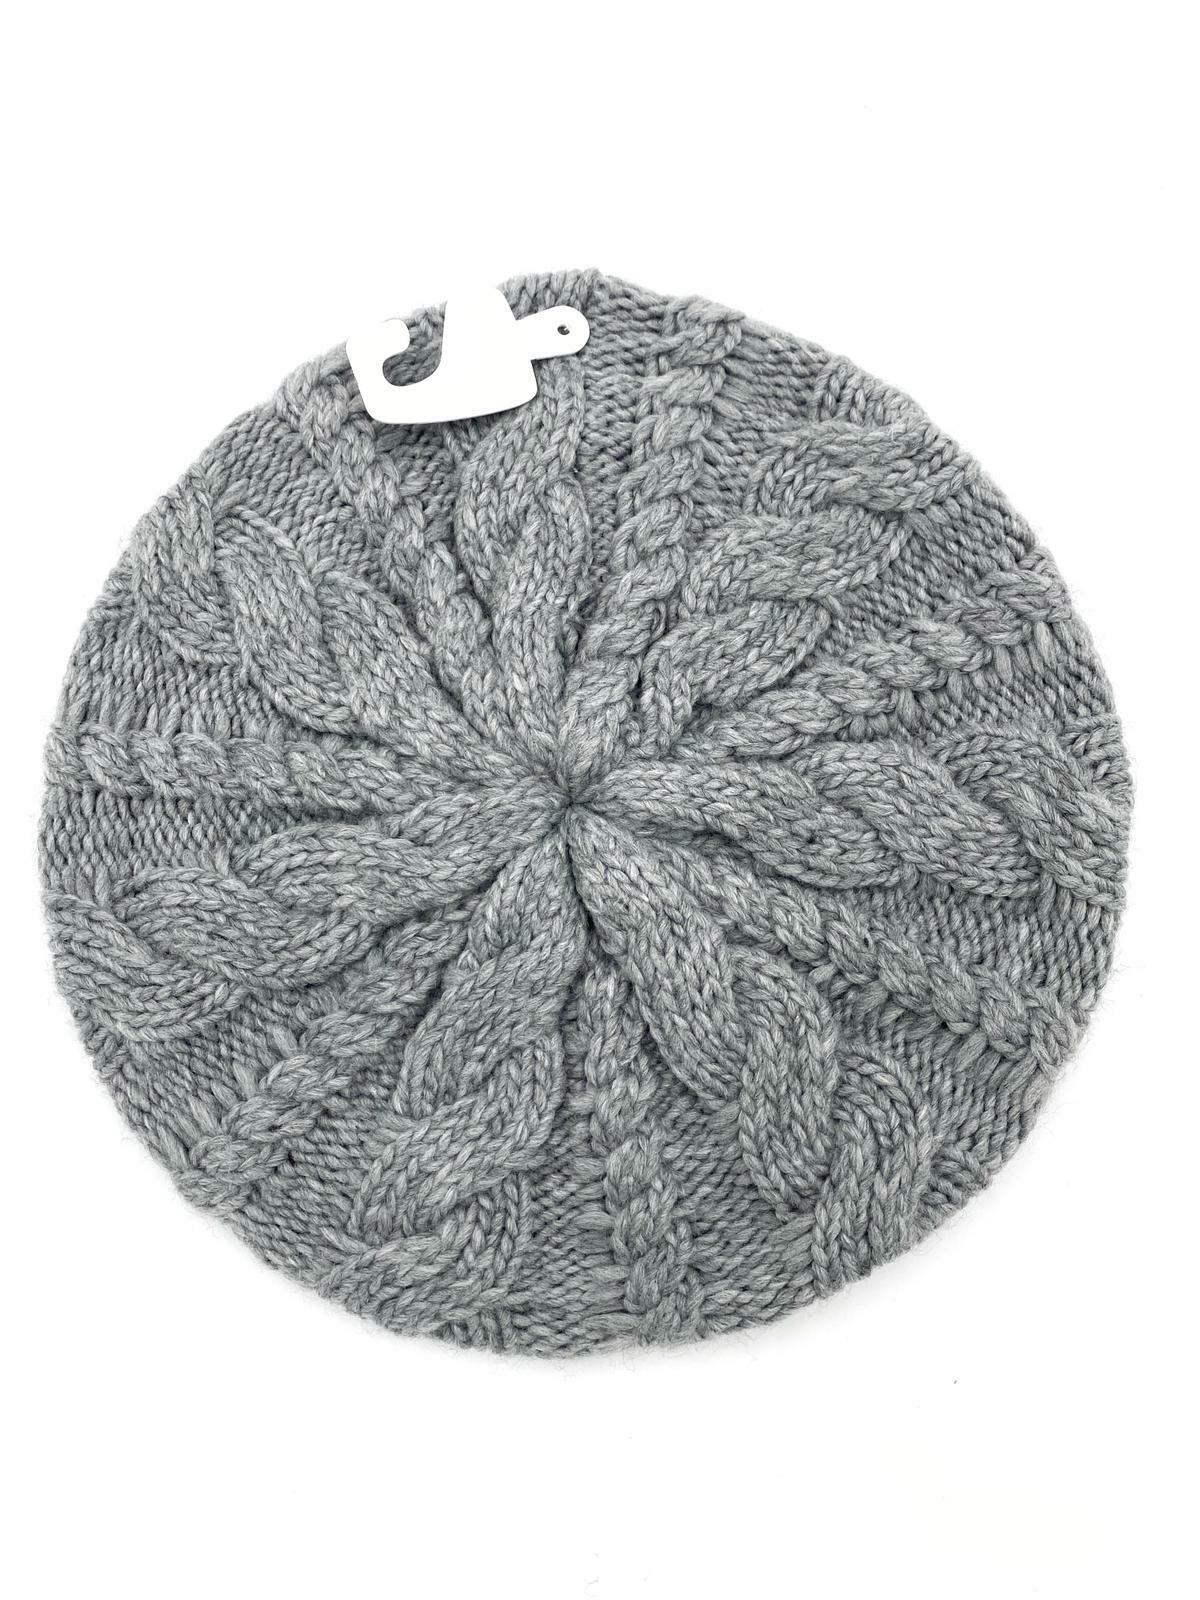 Michael Kors Womens Pearl Heather Grey Sweater Knit Beret Hat